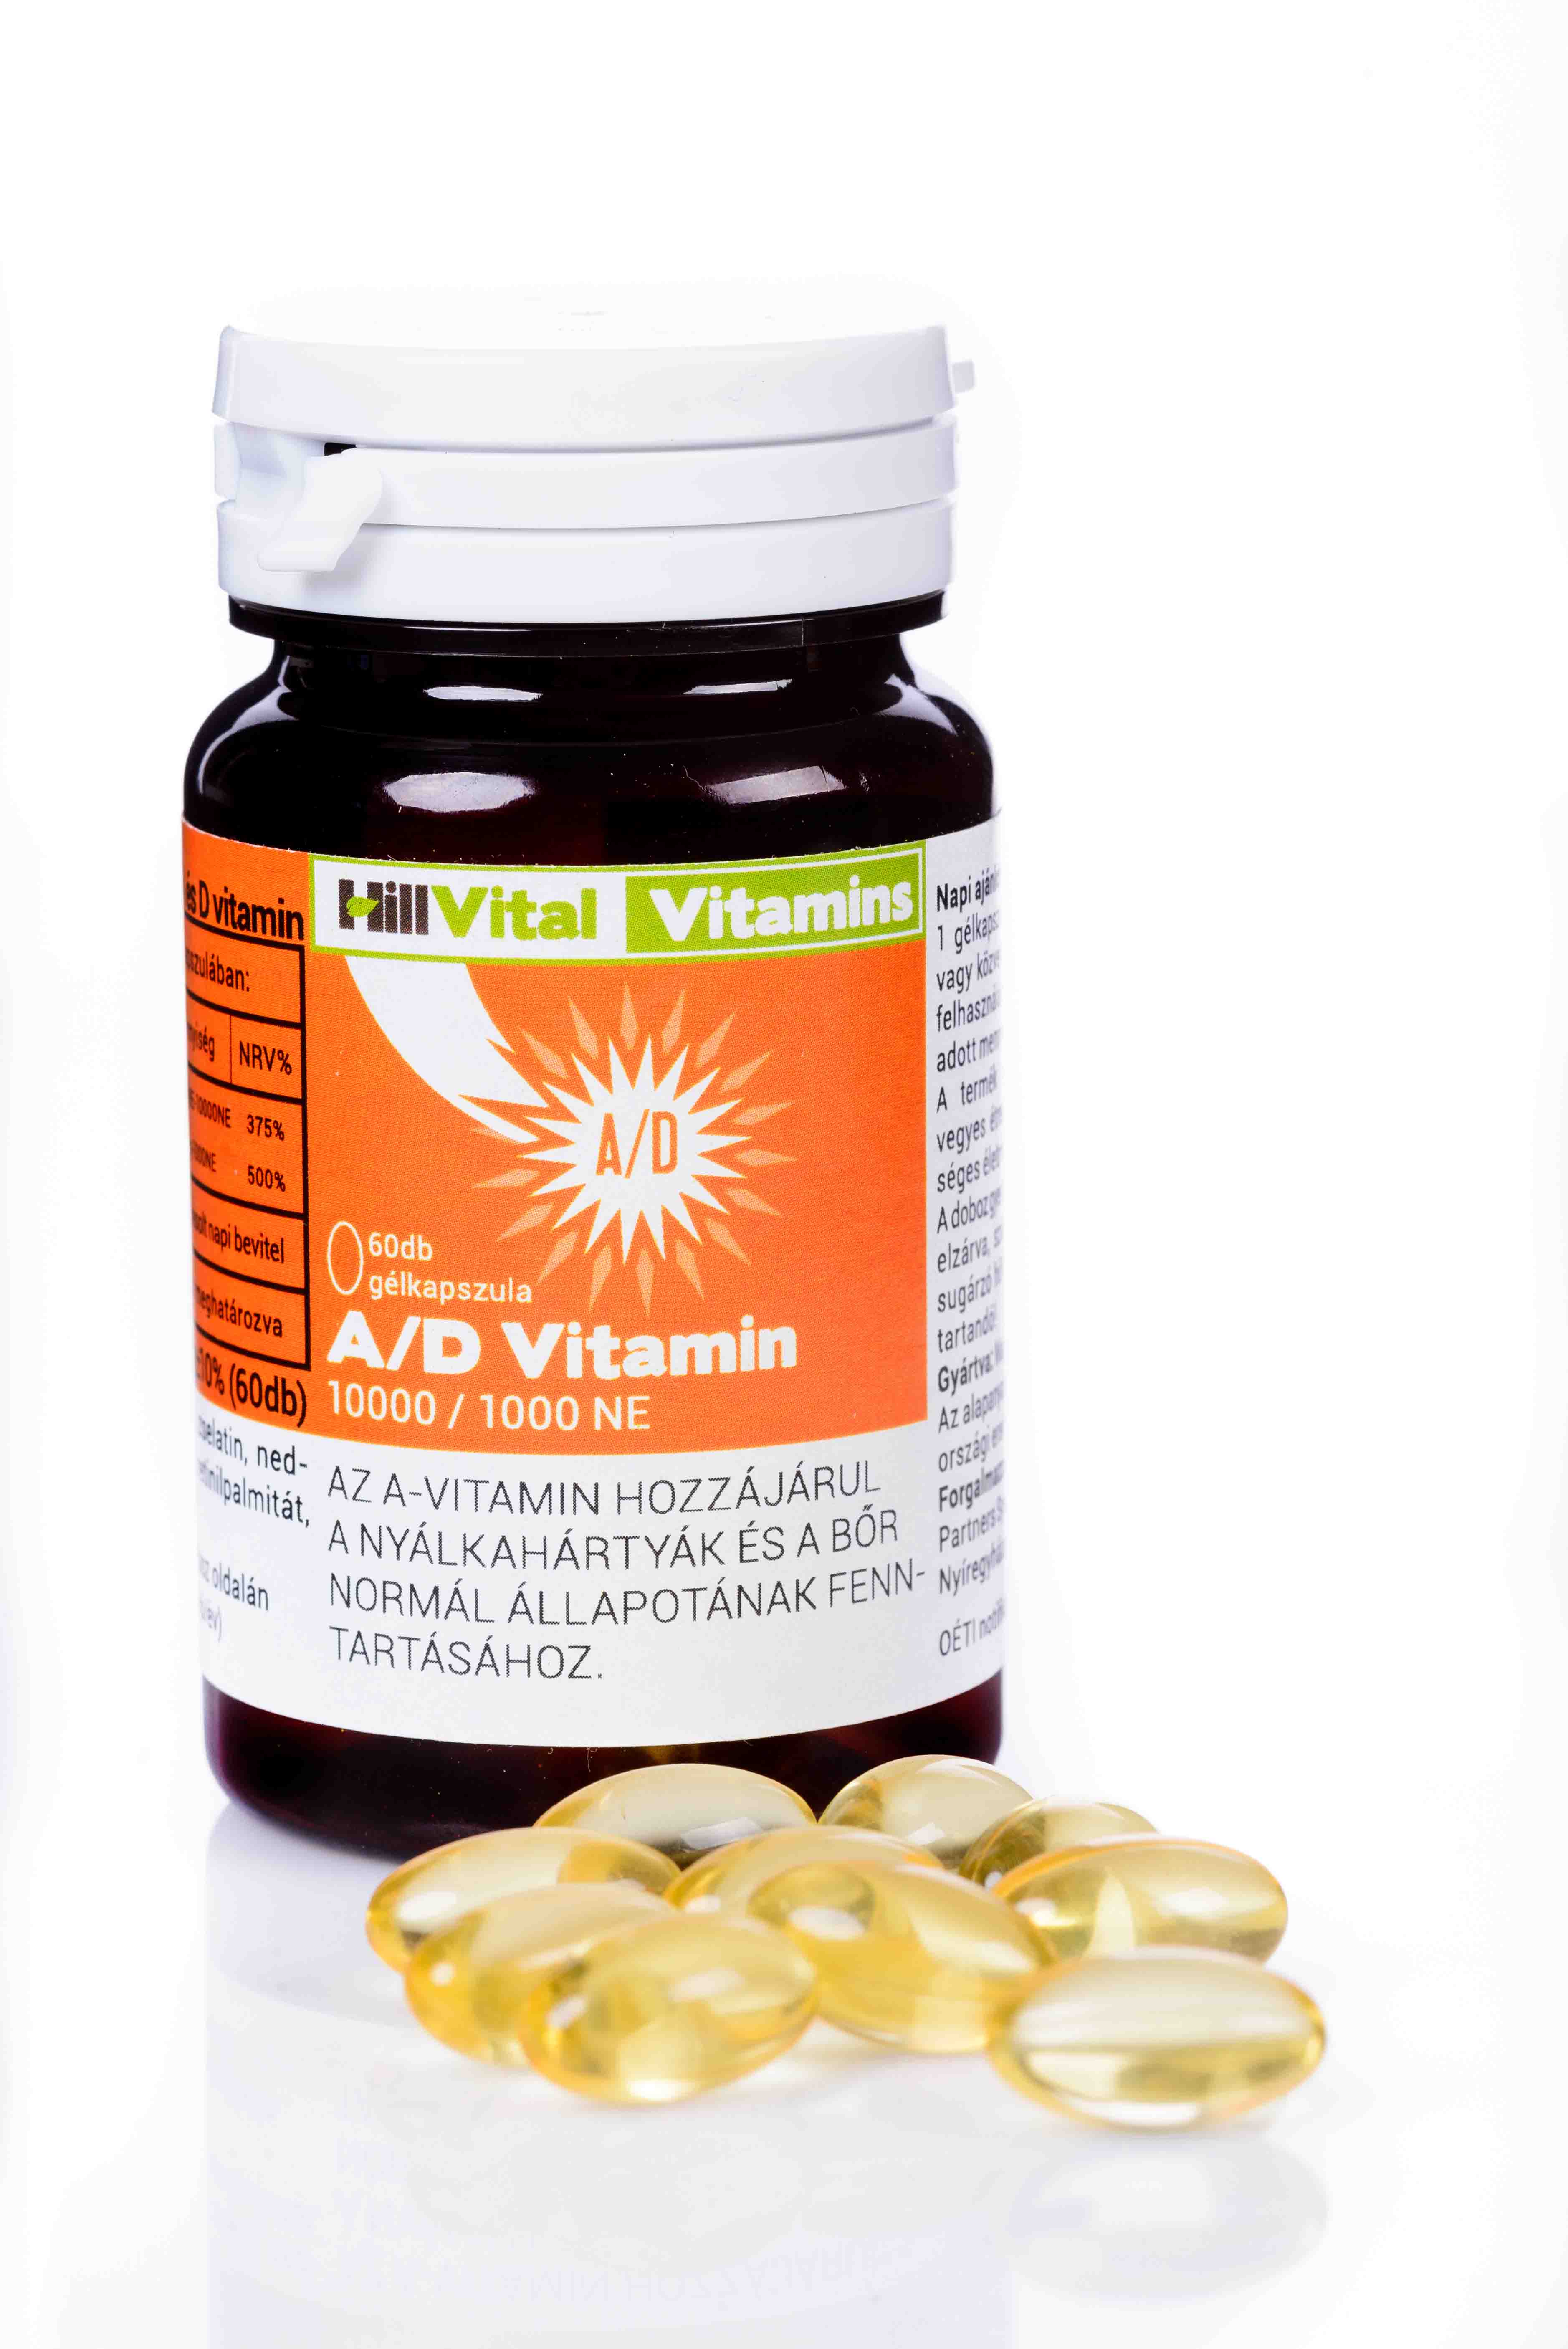 HillVital VITAMIN: A - D vitamin